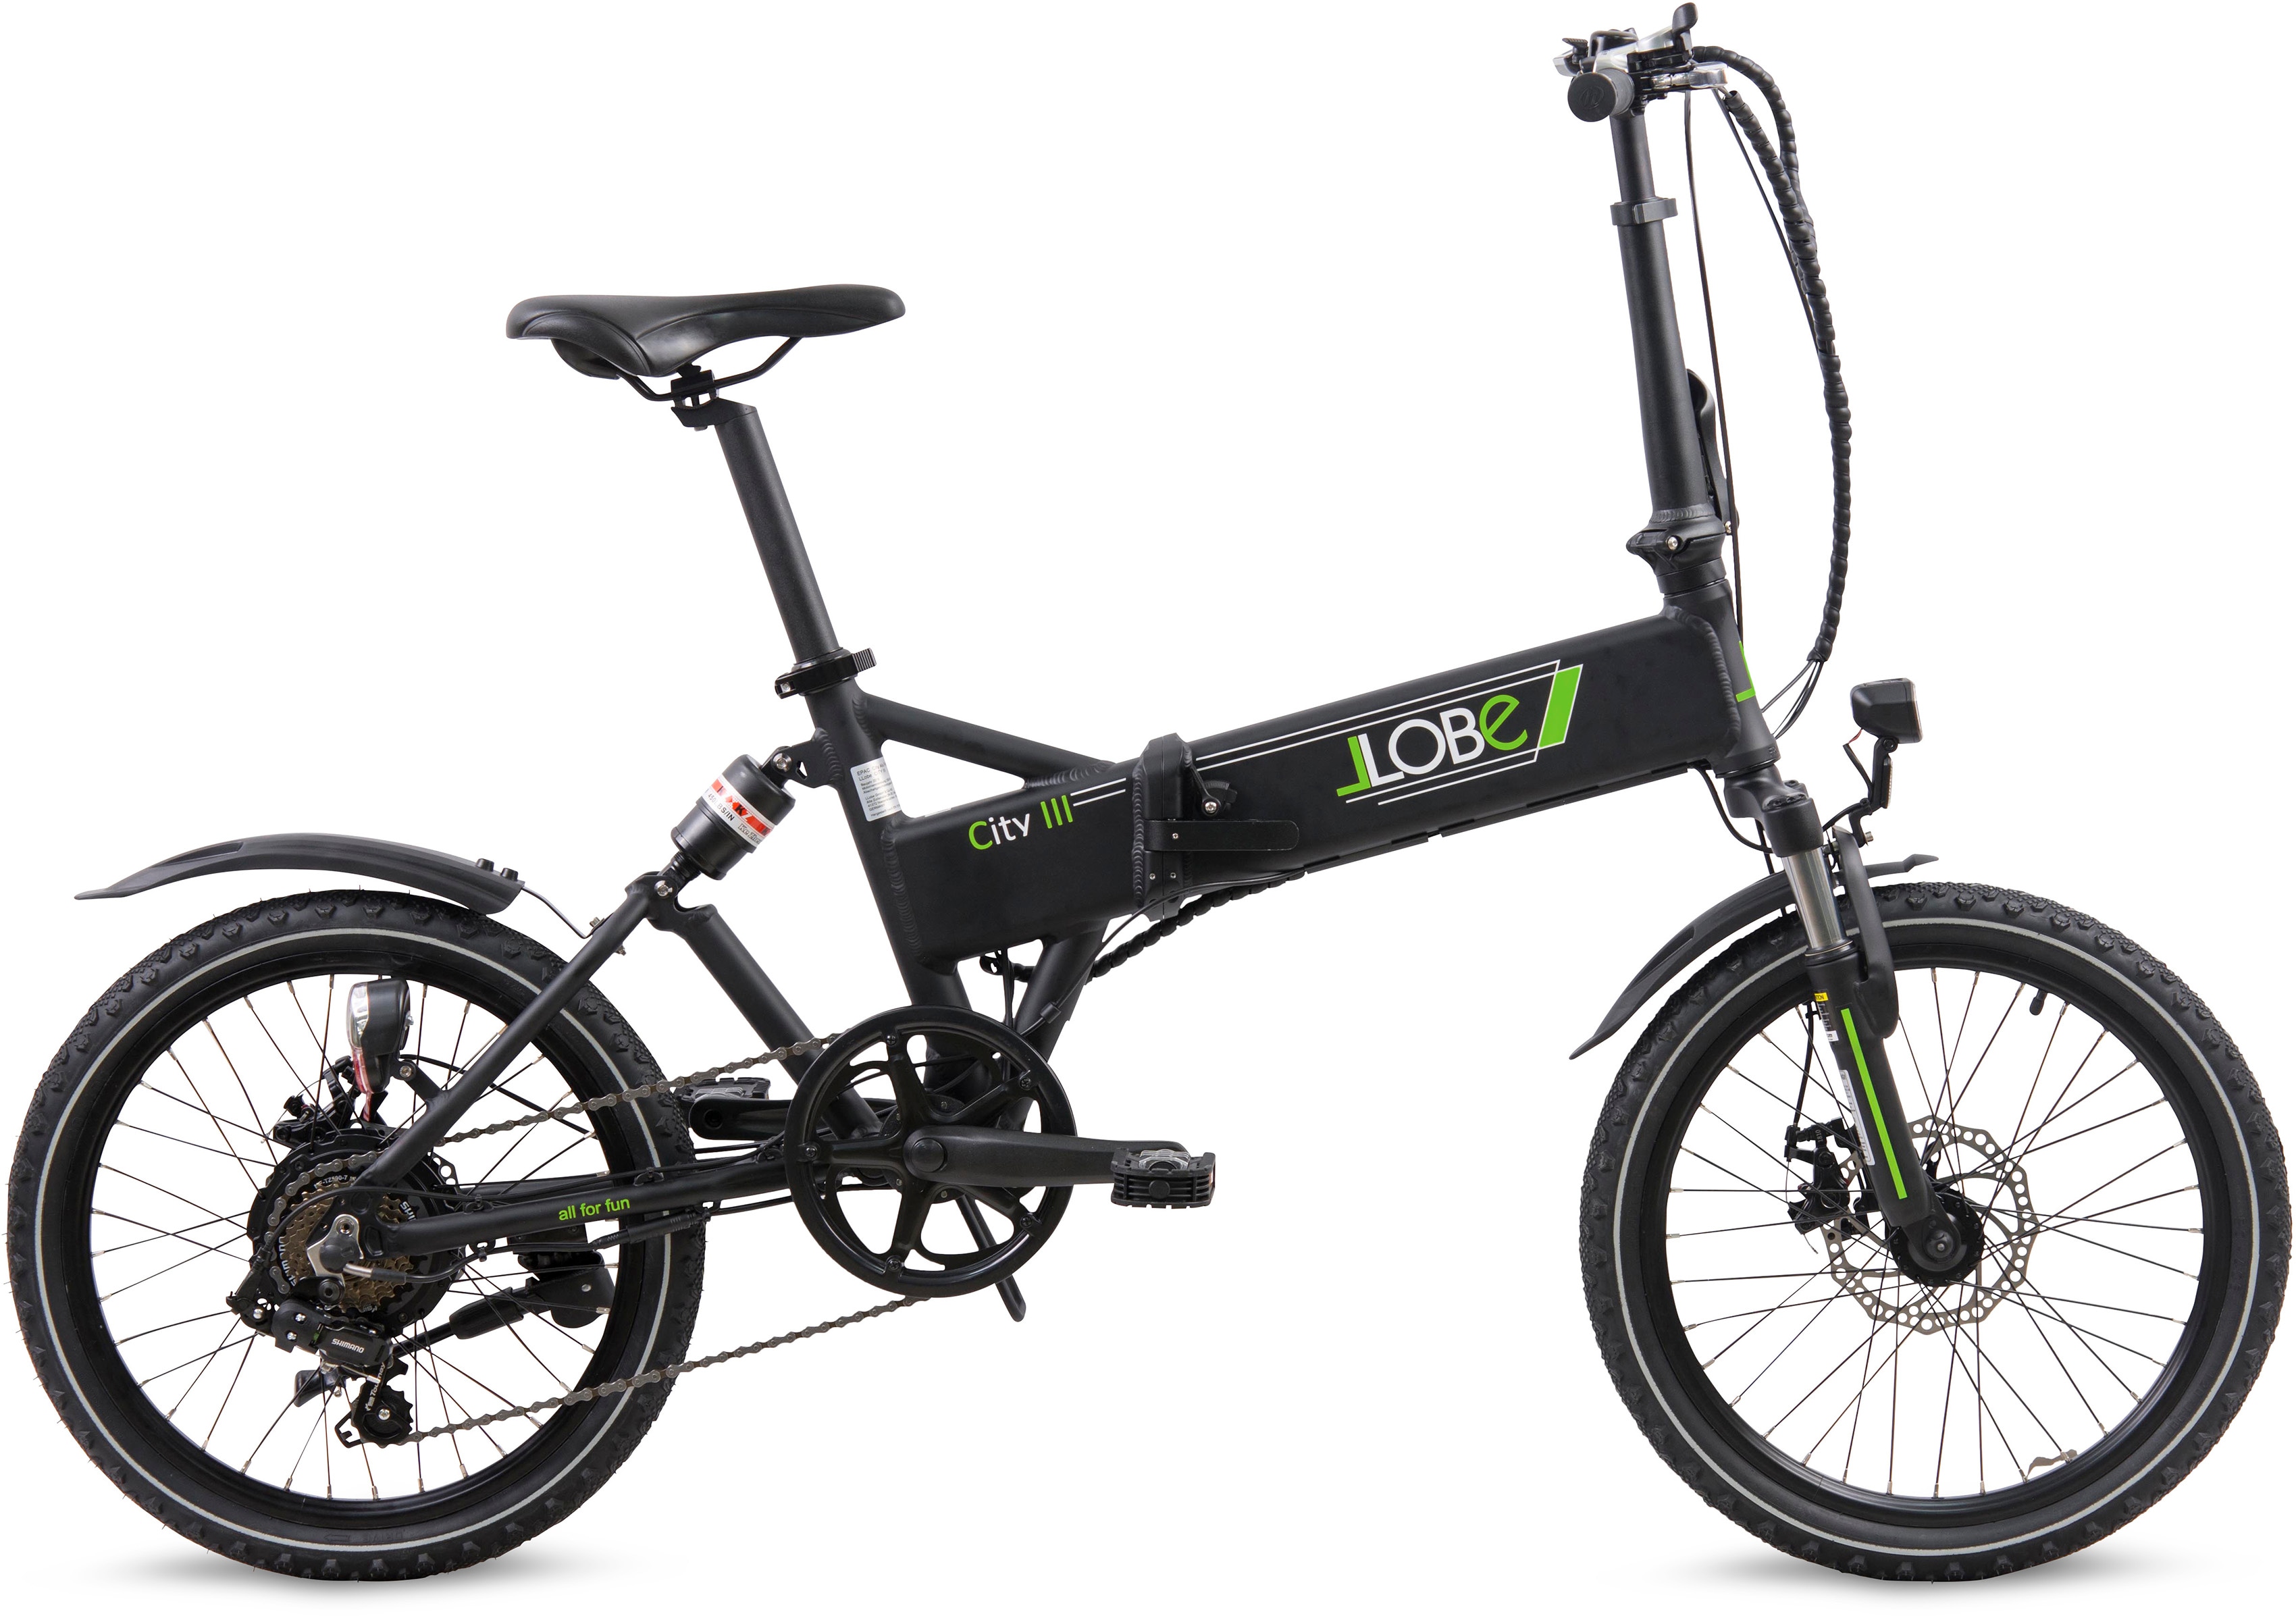 LLobe E-Bike "City III schwarz", 7 Gang, Shimano, Heckmotor 250 W